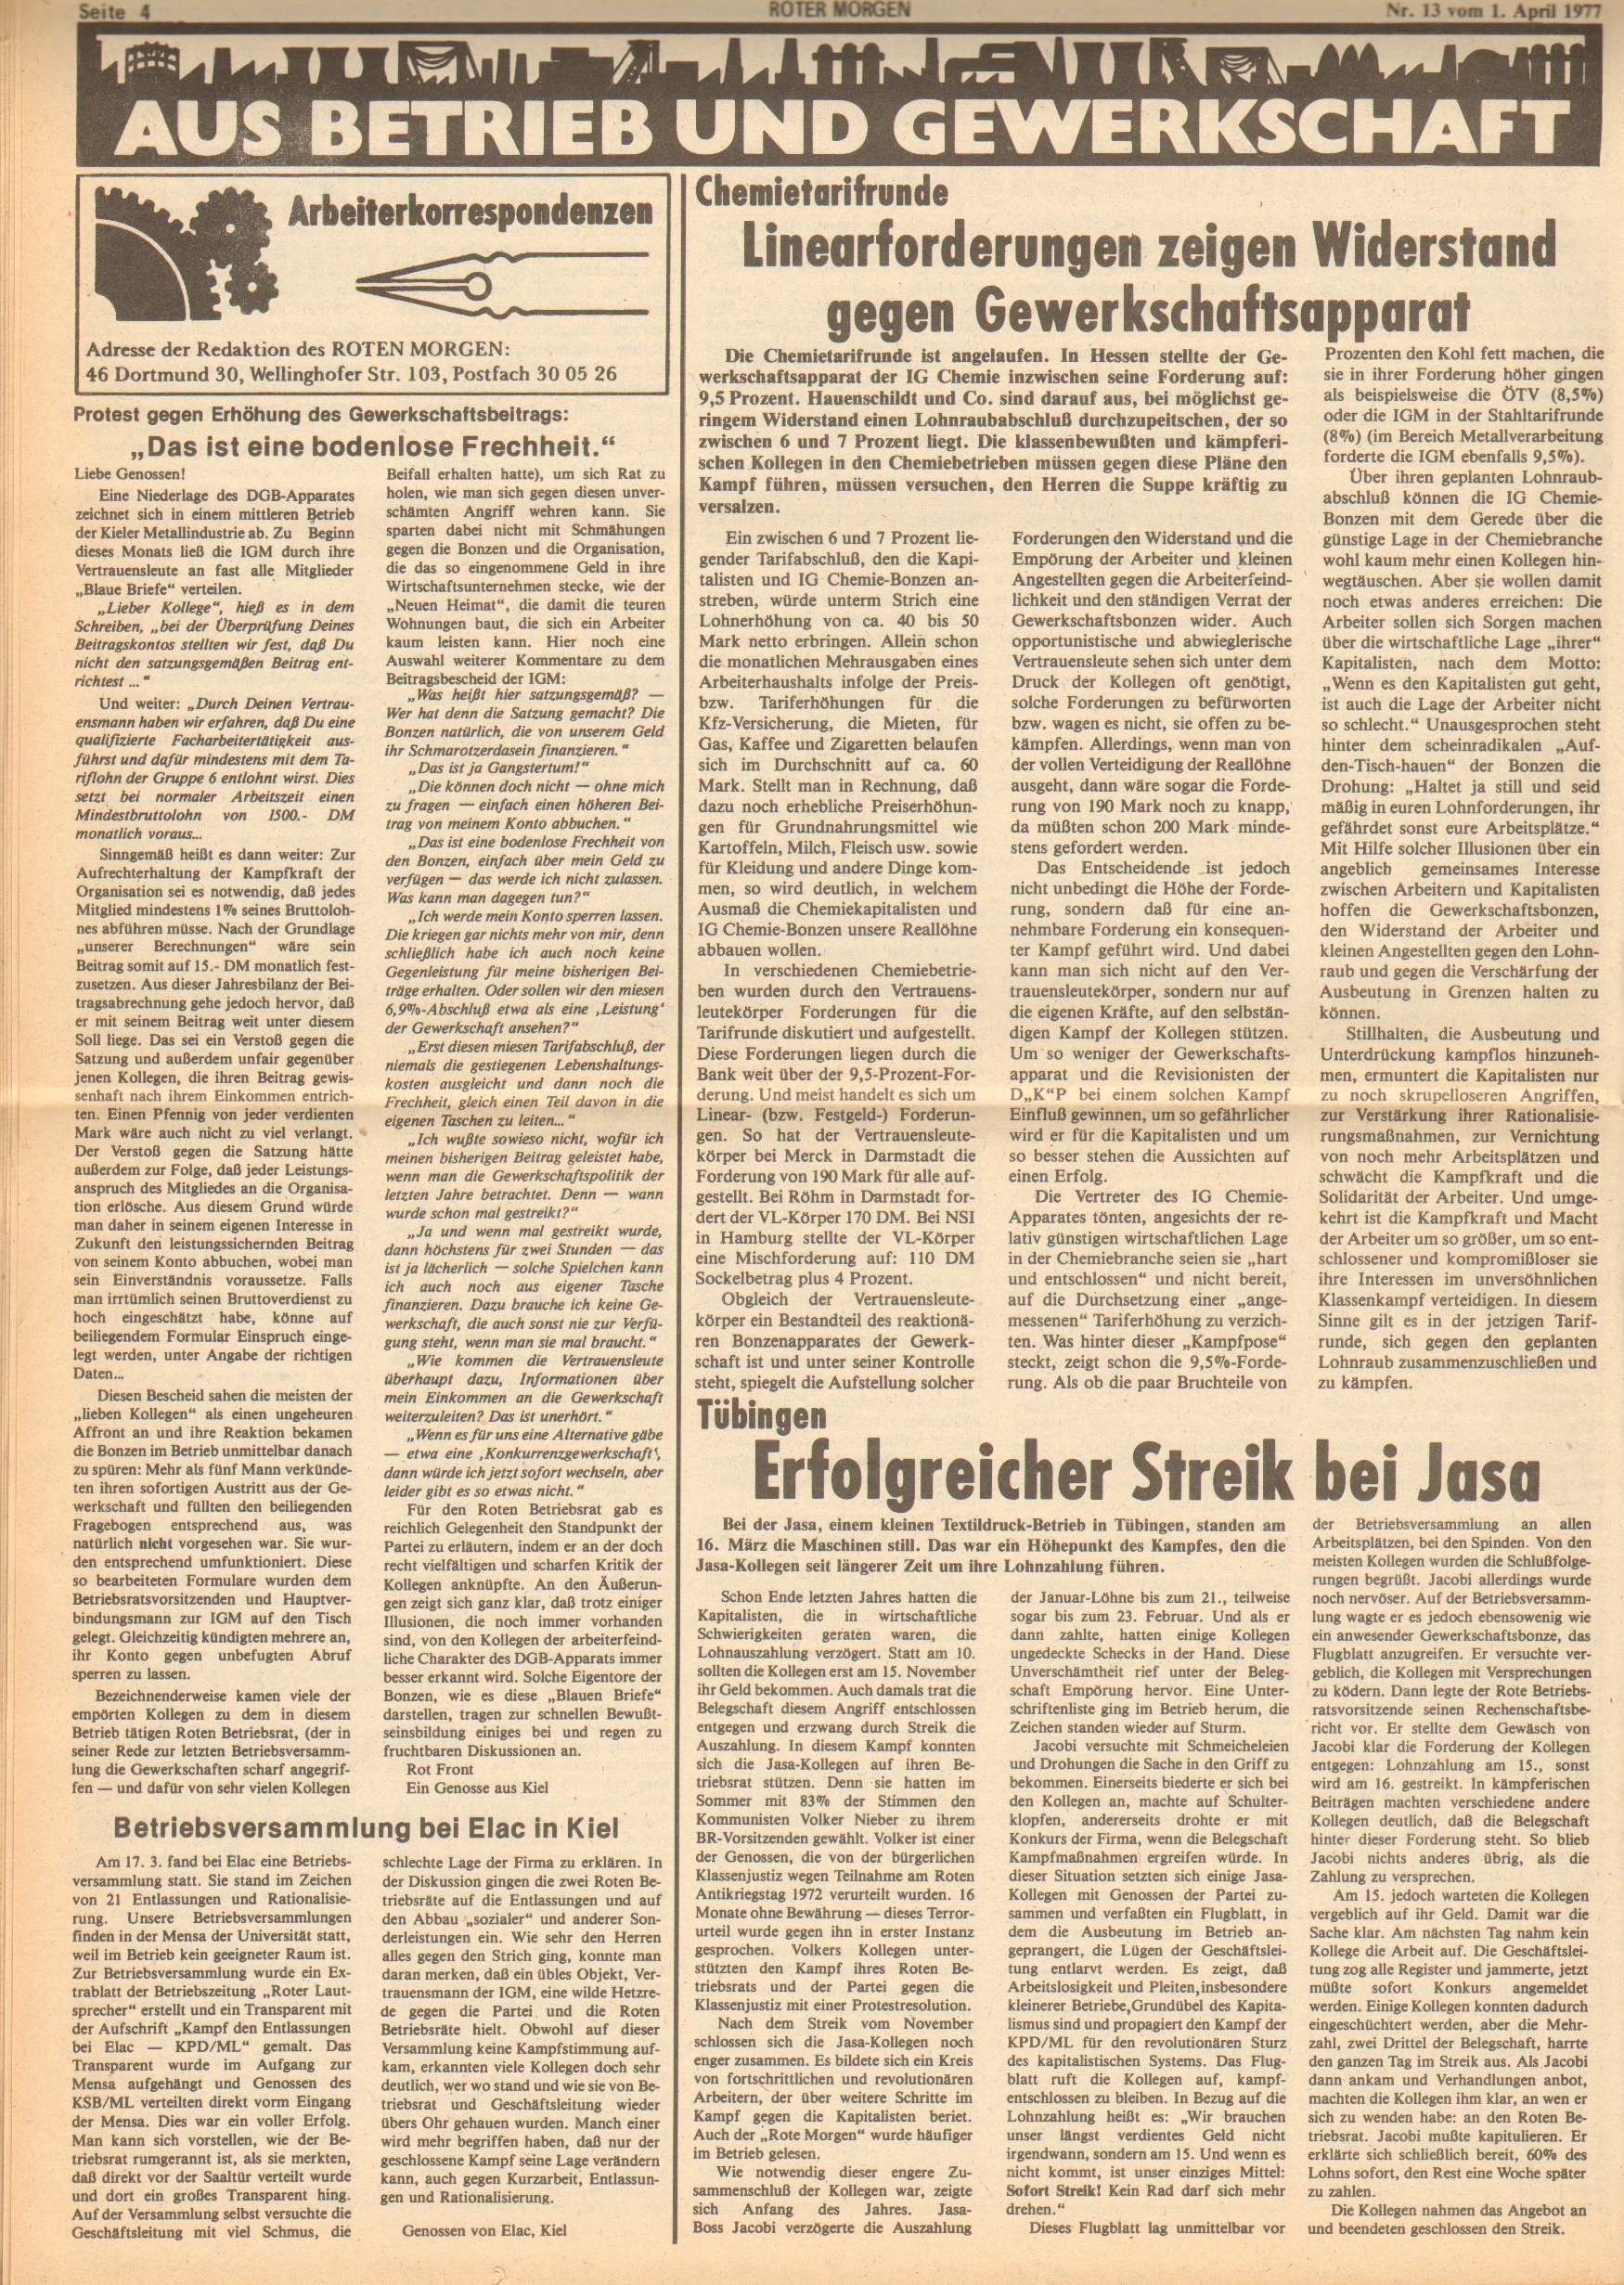 Roter Morgen, 11. Jg., 1. April 1977, Nr. 13, Seite 4